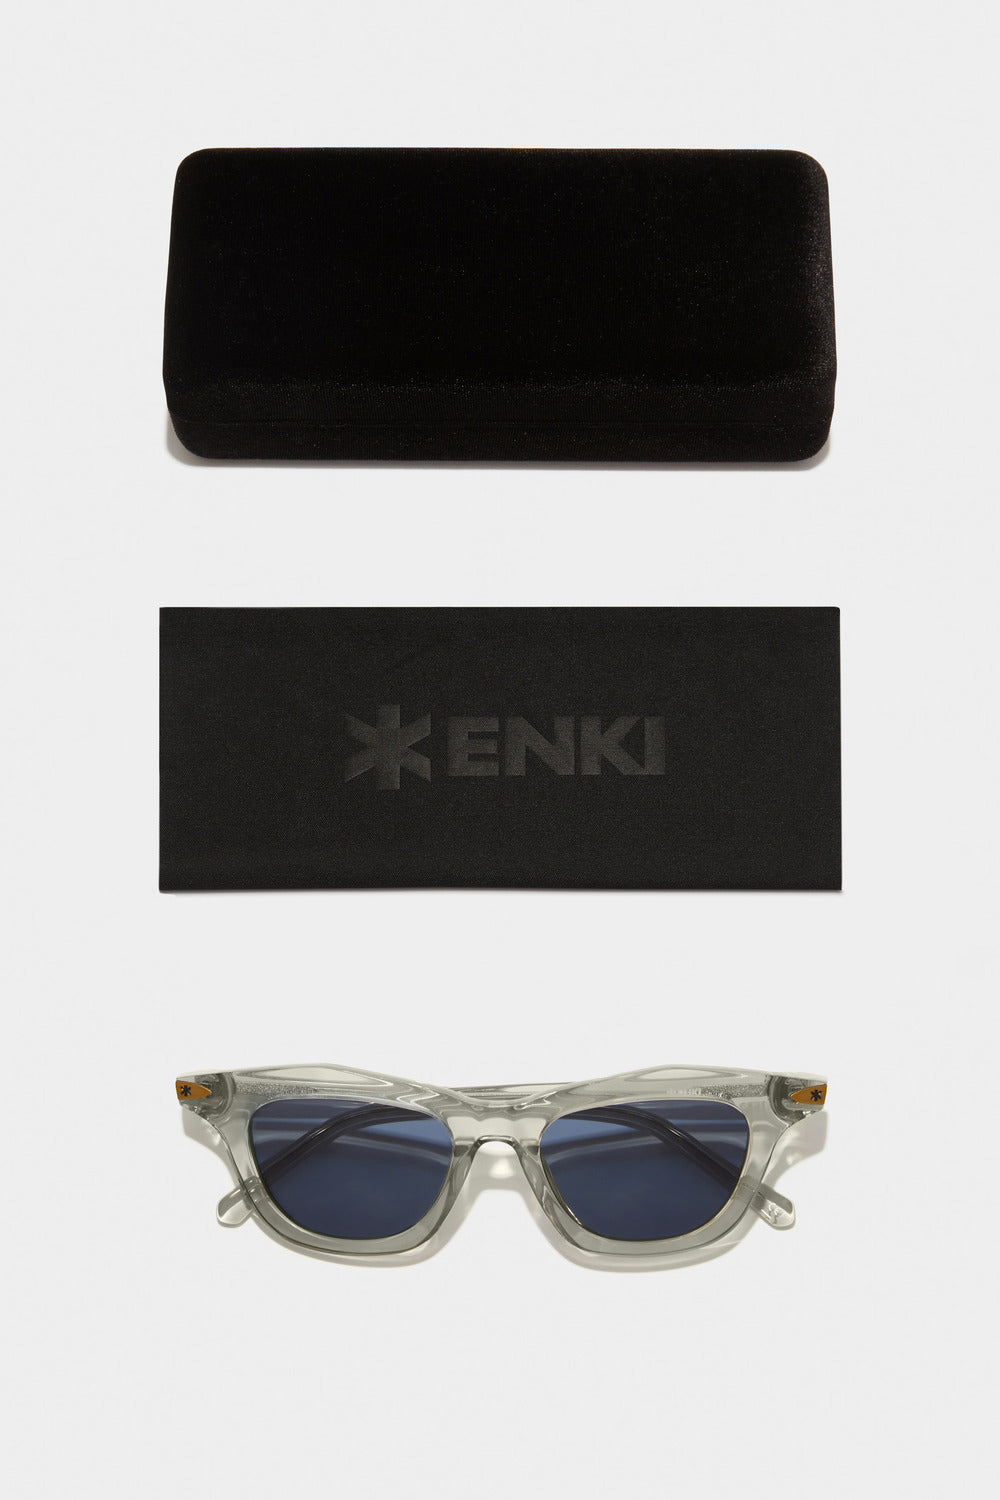 www.enkieyewear.com Panaetius Men’s and Women’s Sunglasses